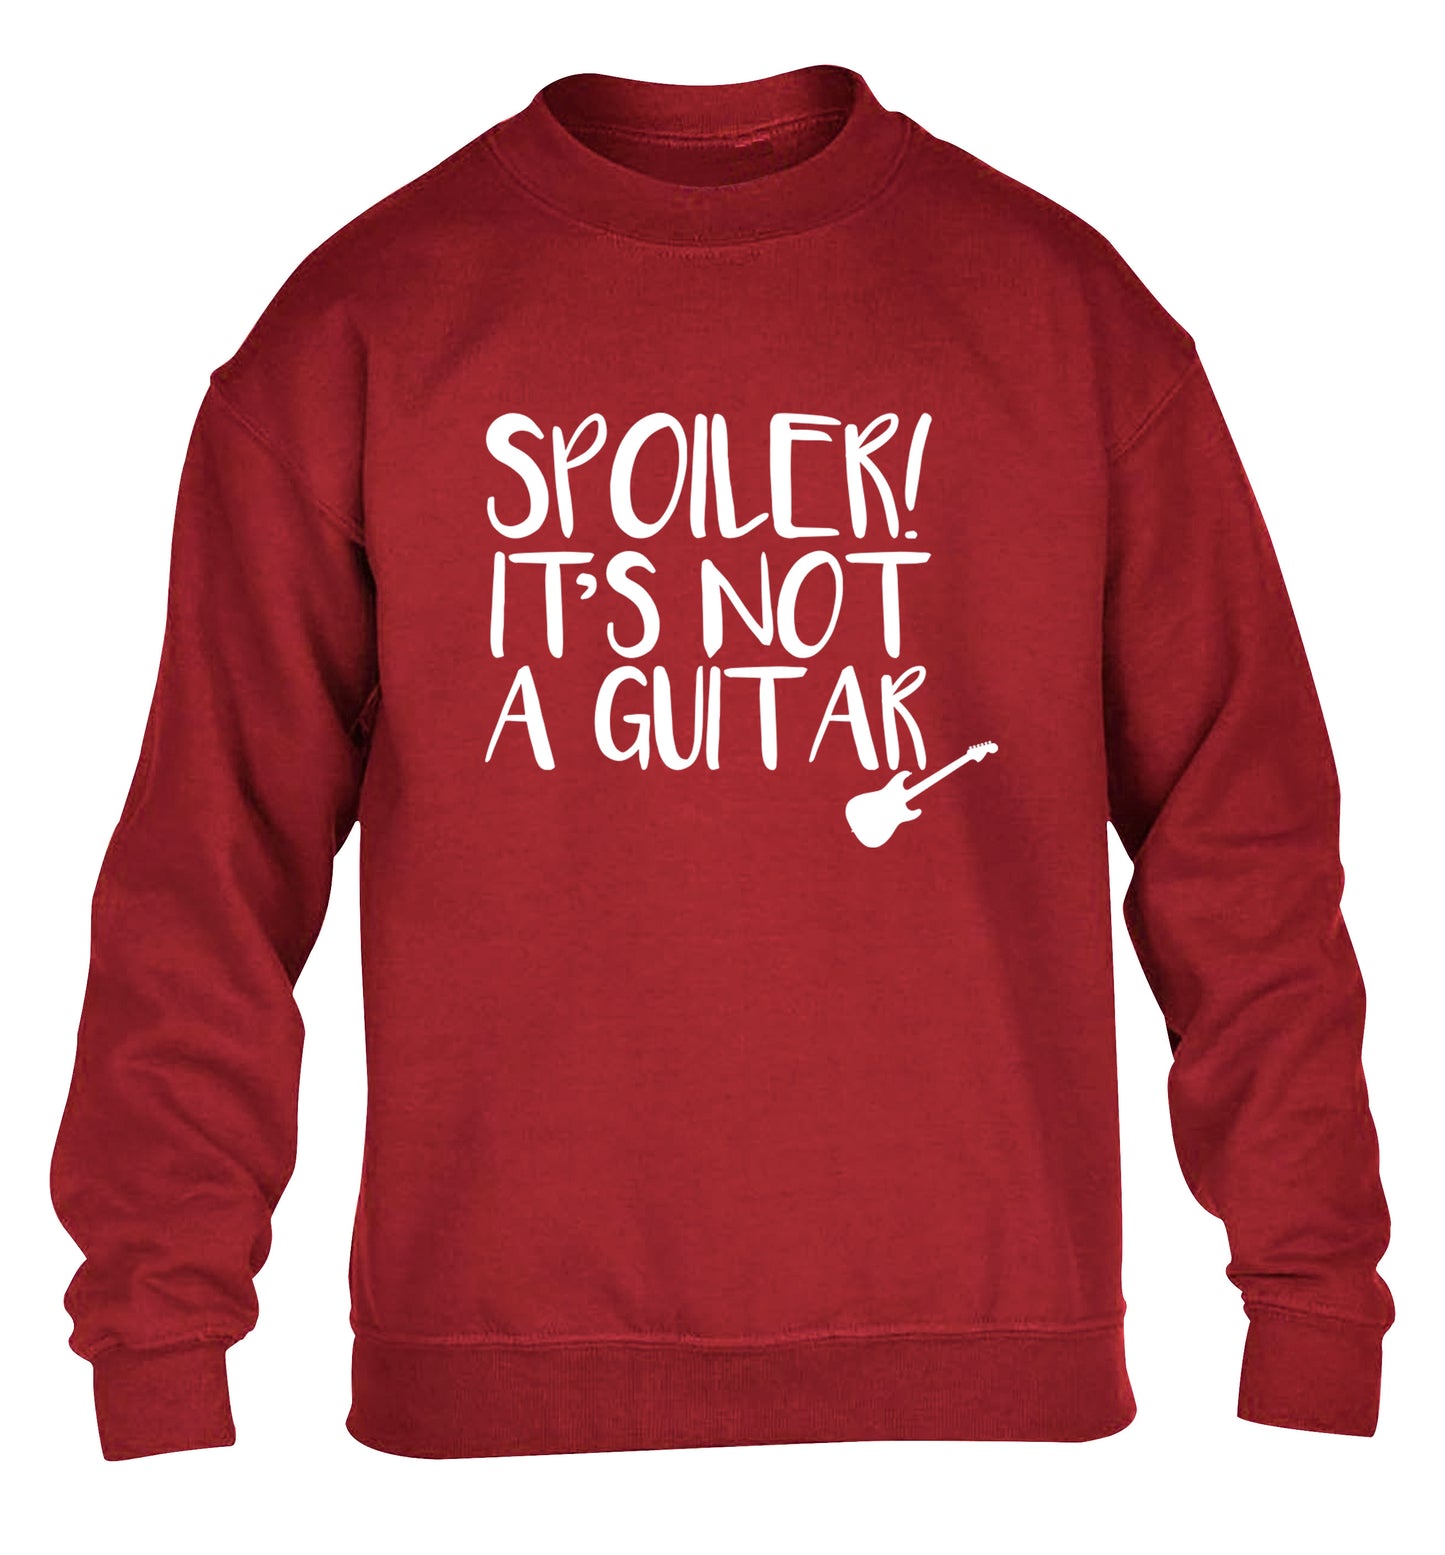 Spoiler it's not a guitar children's grey sweater 12-13 Years